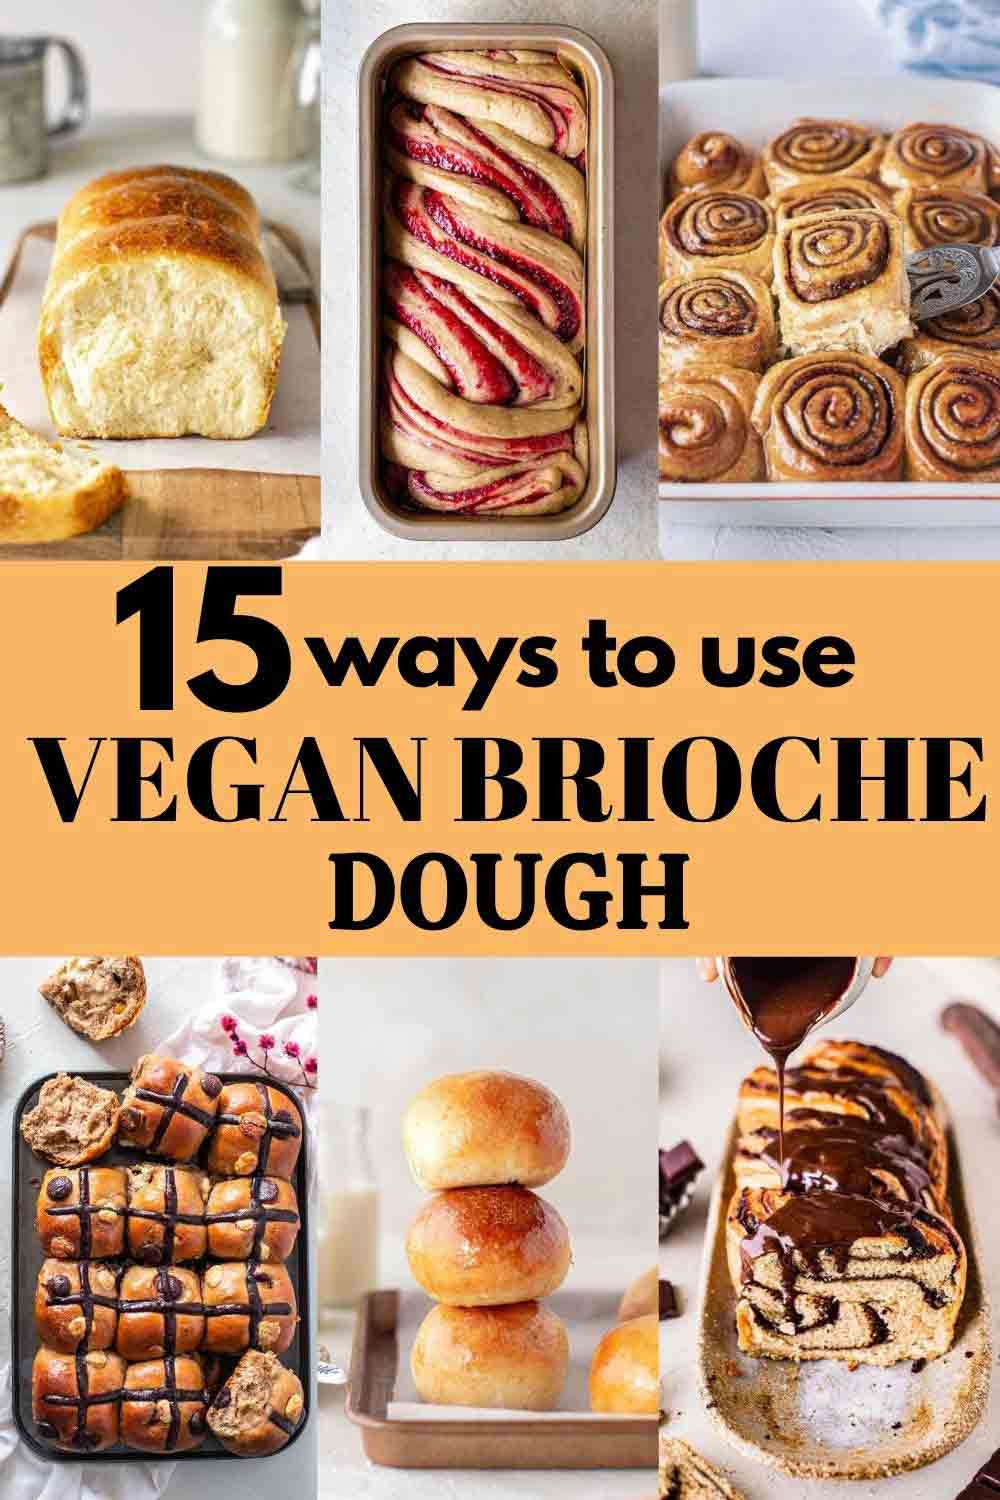 15 ways to use vegan brioche dough